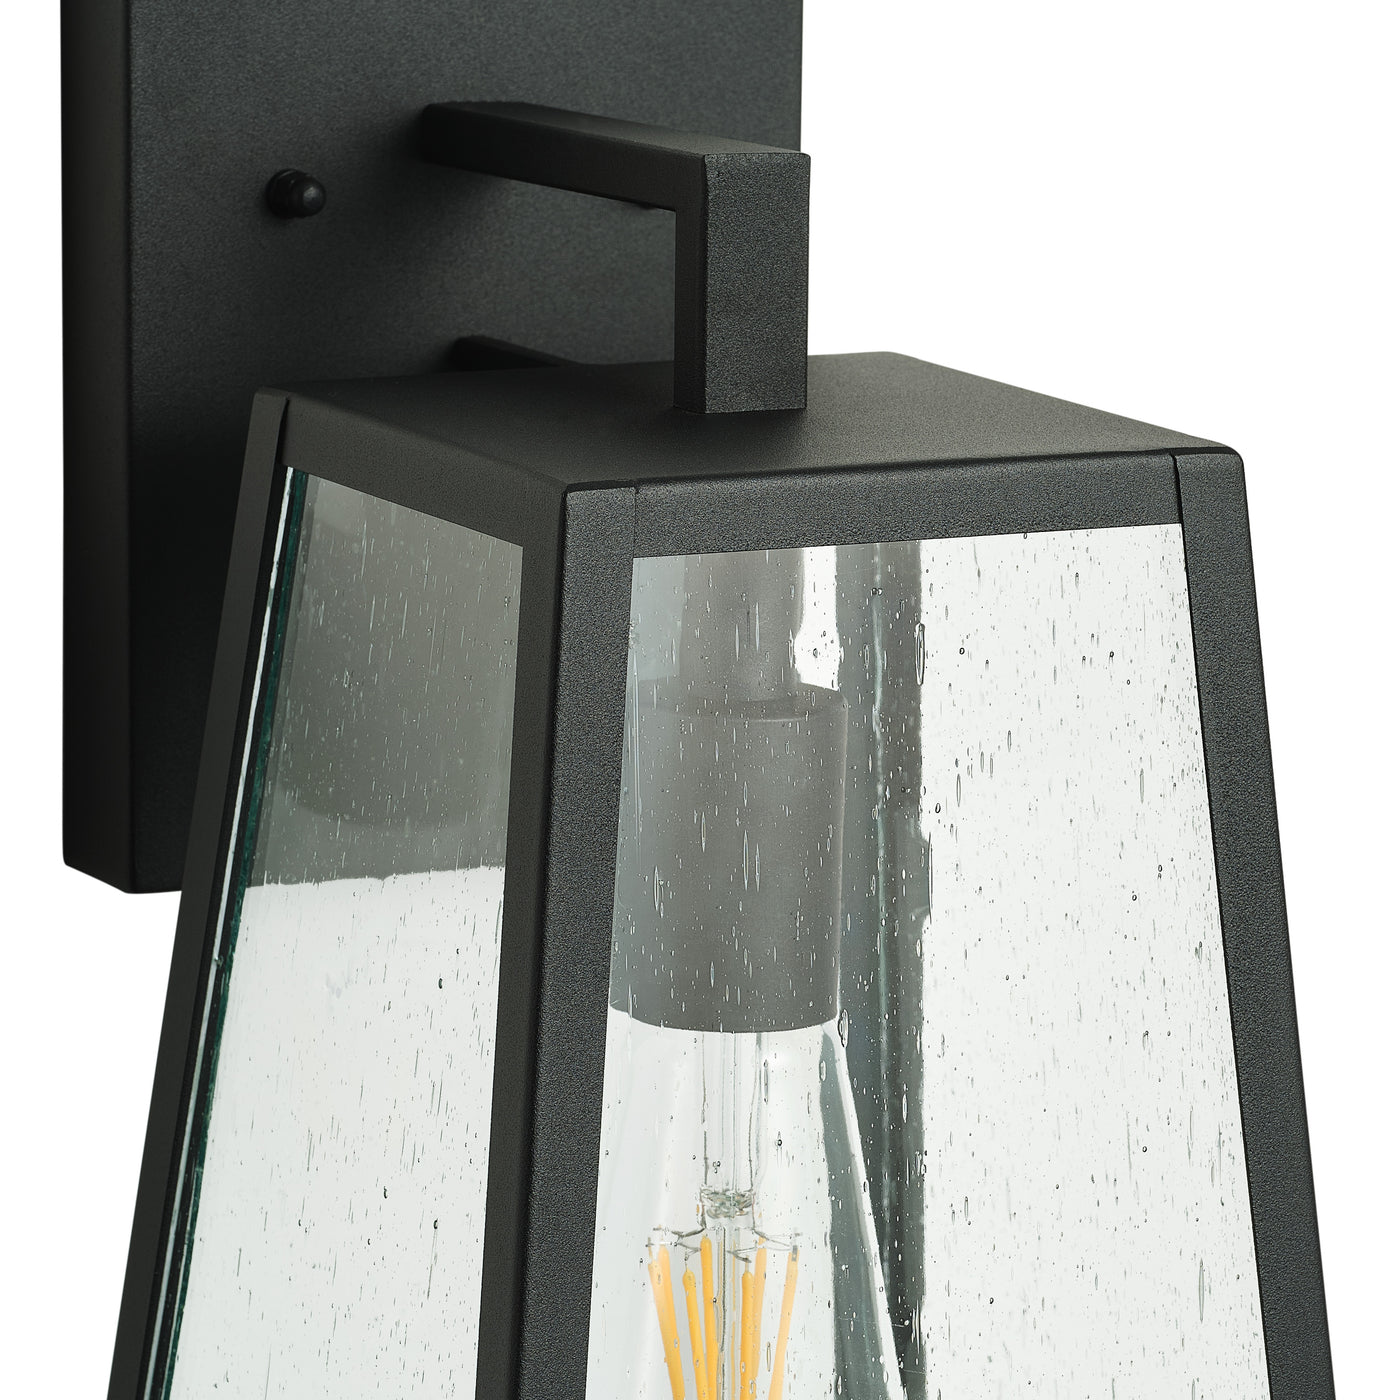 1-Light Prismatic Glass Design Waterproof Wall Sconces Outdoor Lights